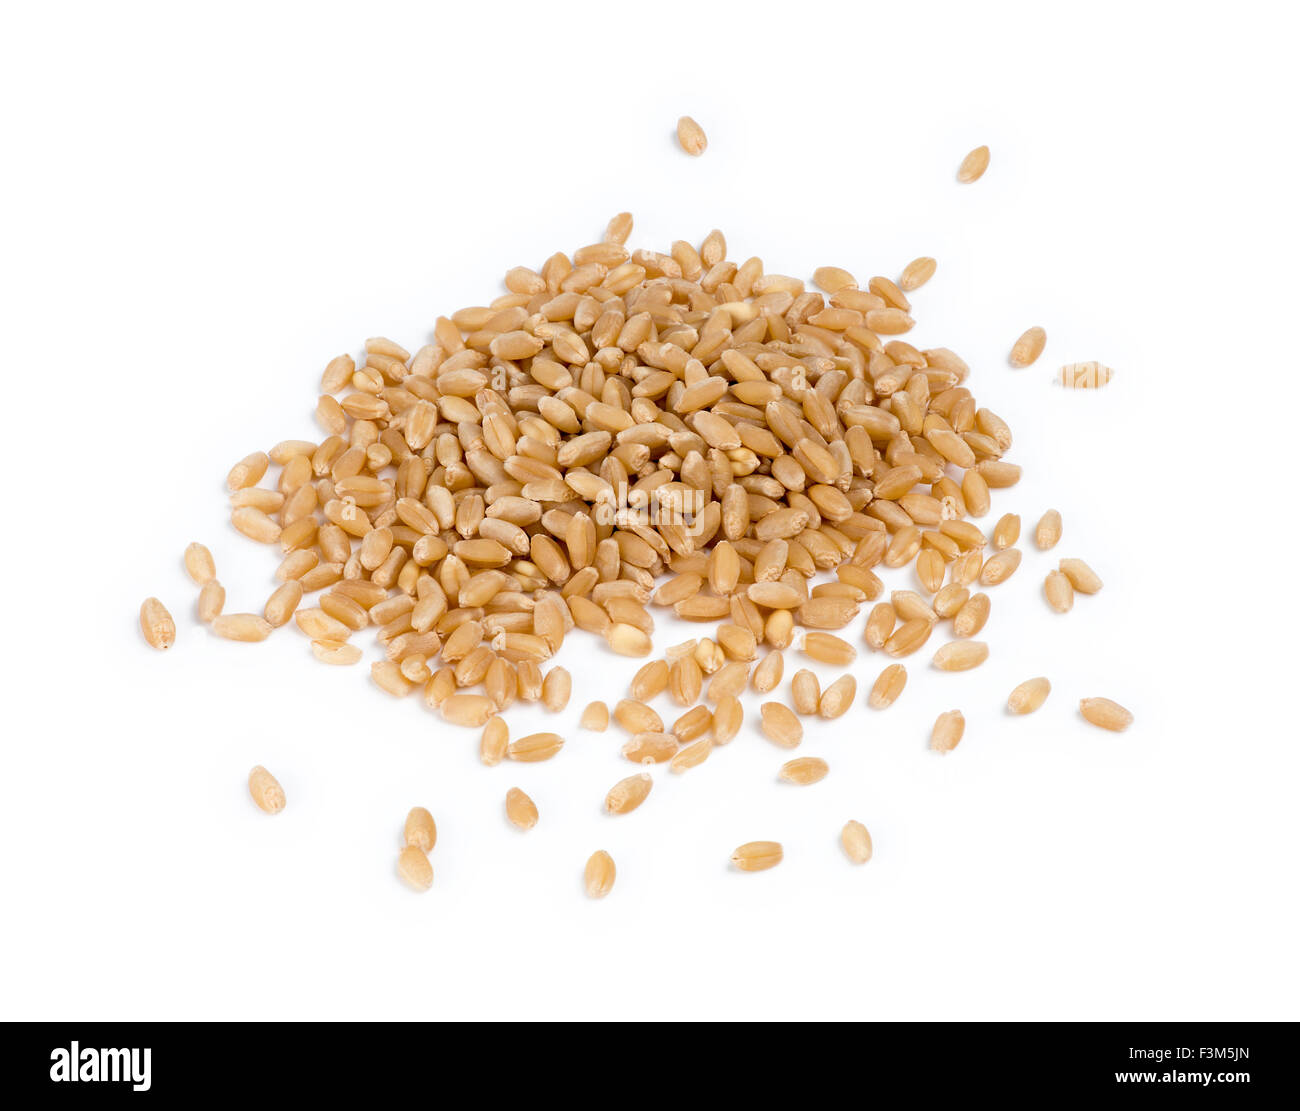 Closeup of a pile of wheatgrass seeds Stock Photo